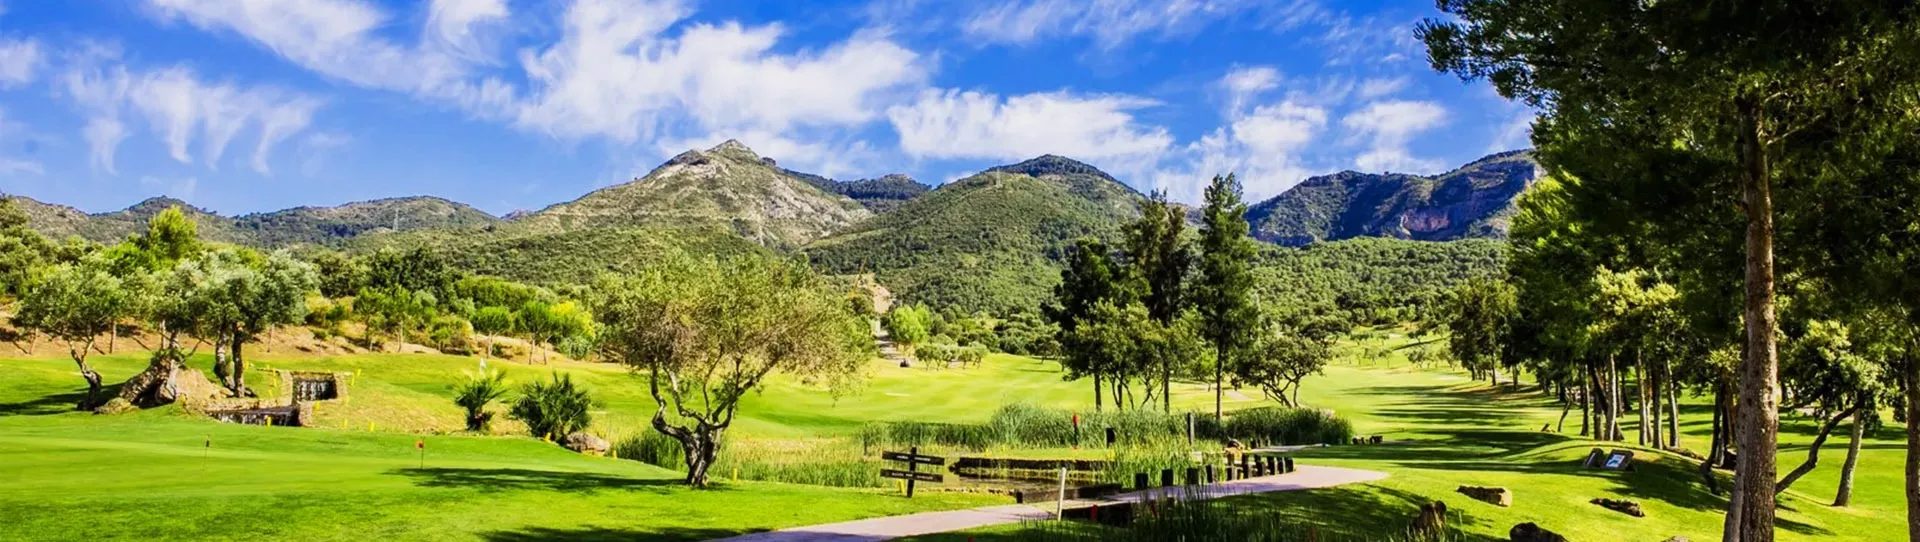 Spain golf courses - Lauro Golf Course - Photo 2